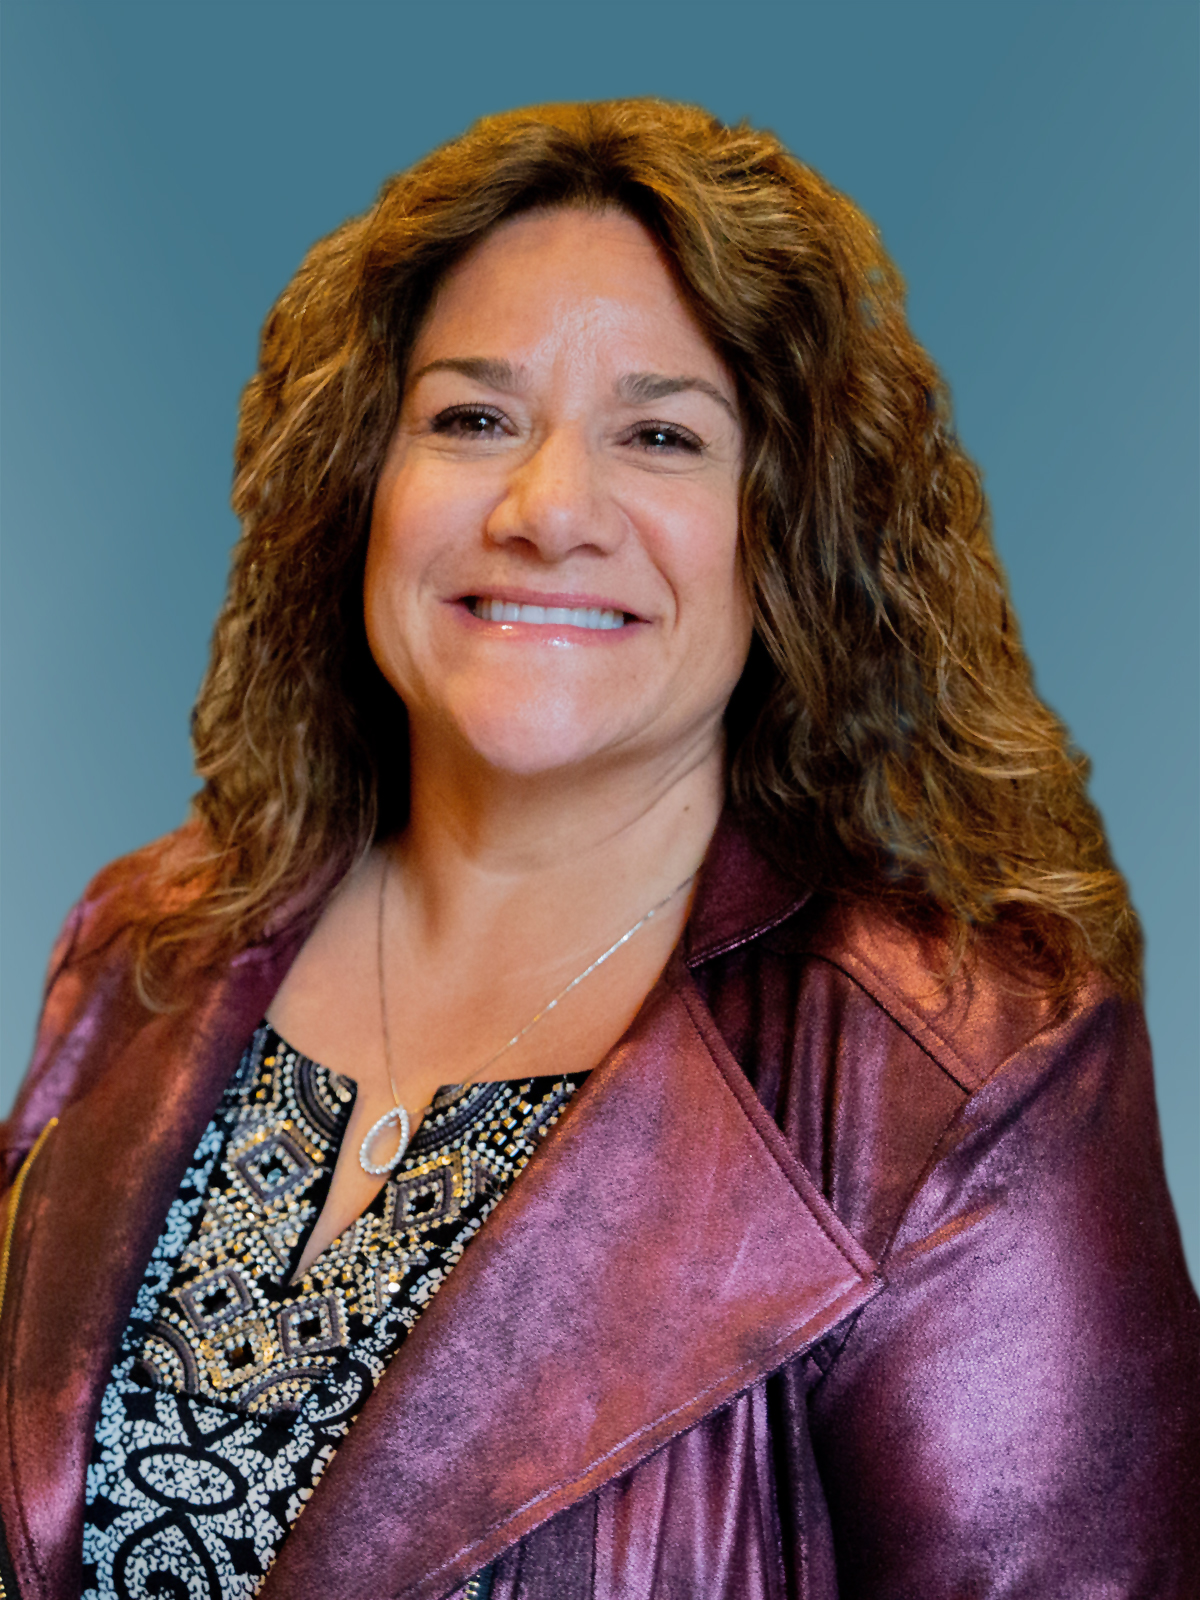 Brenda Discher, Senior Vice President, Strategy and Marketing